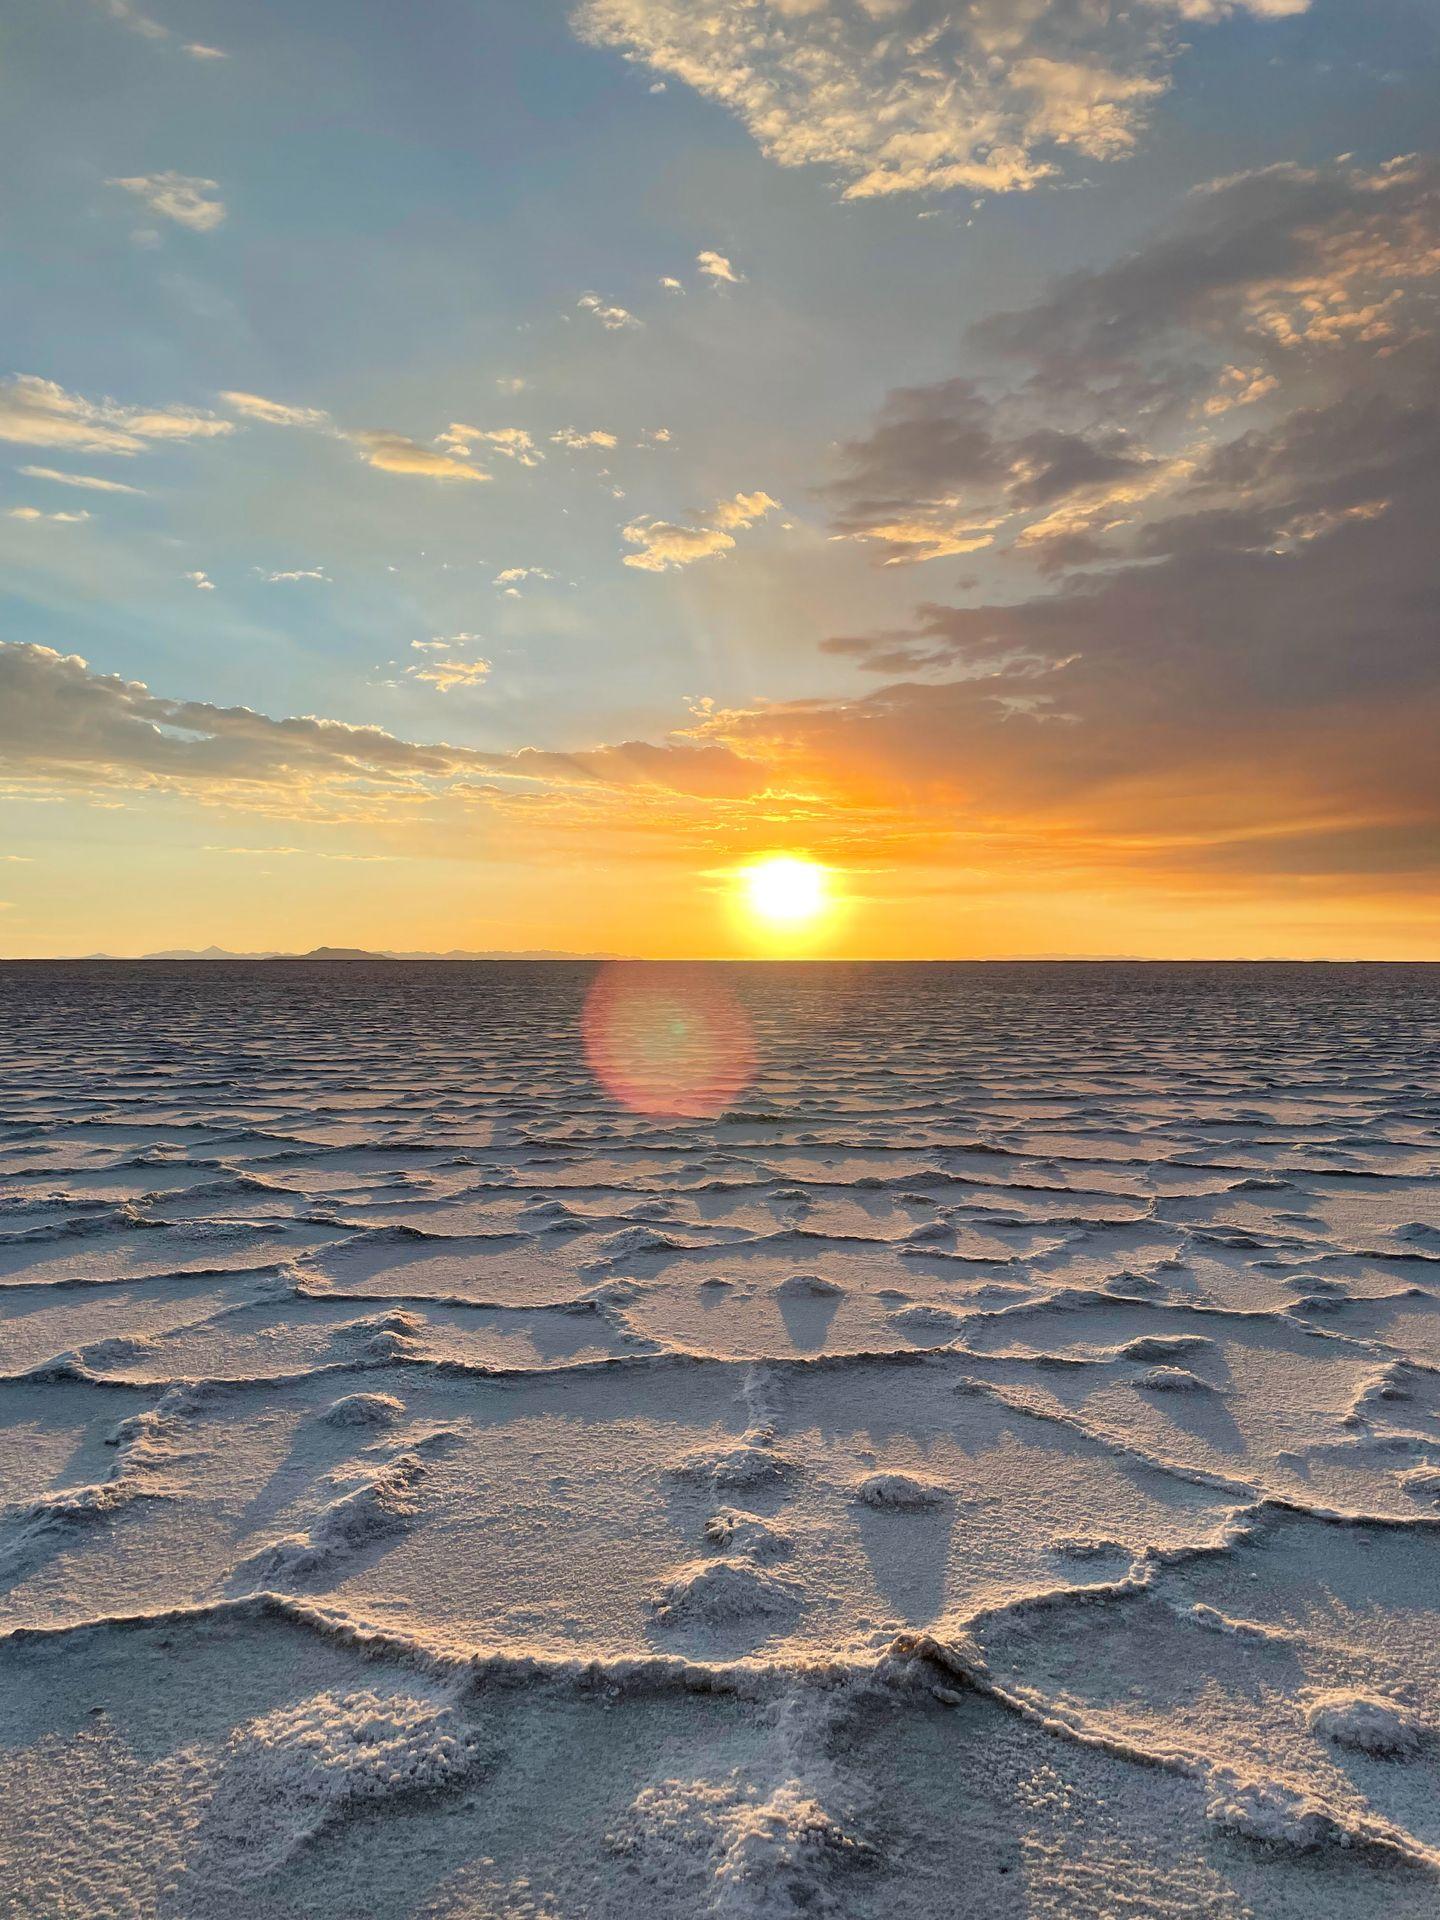 The sunrise from Bonneville Salt Flats